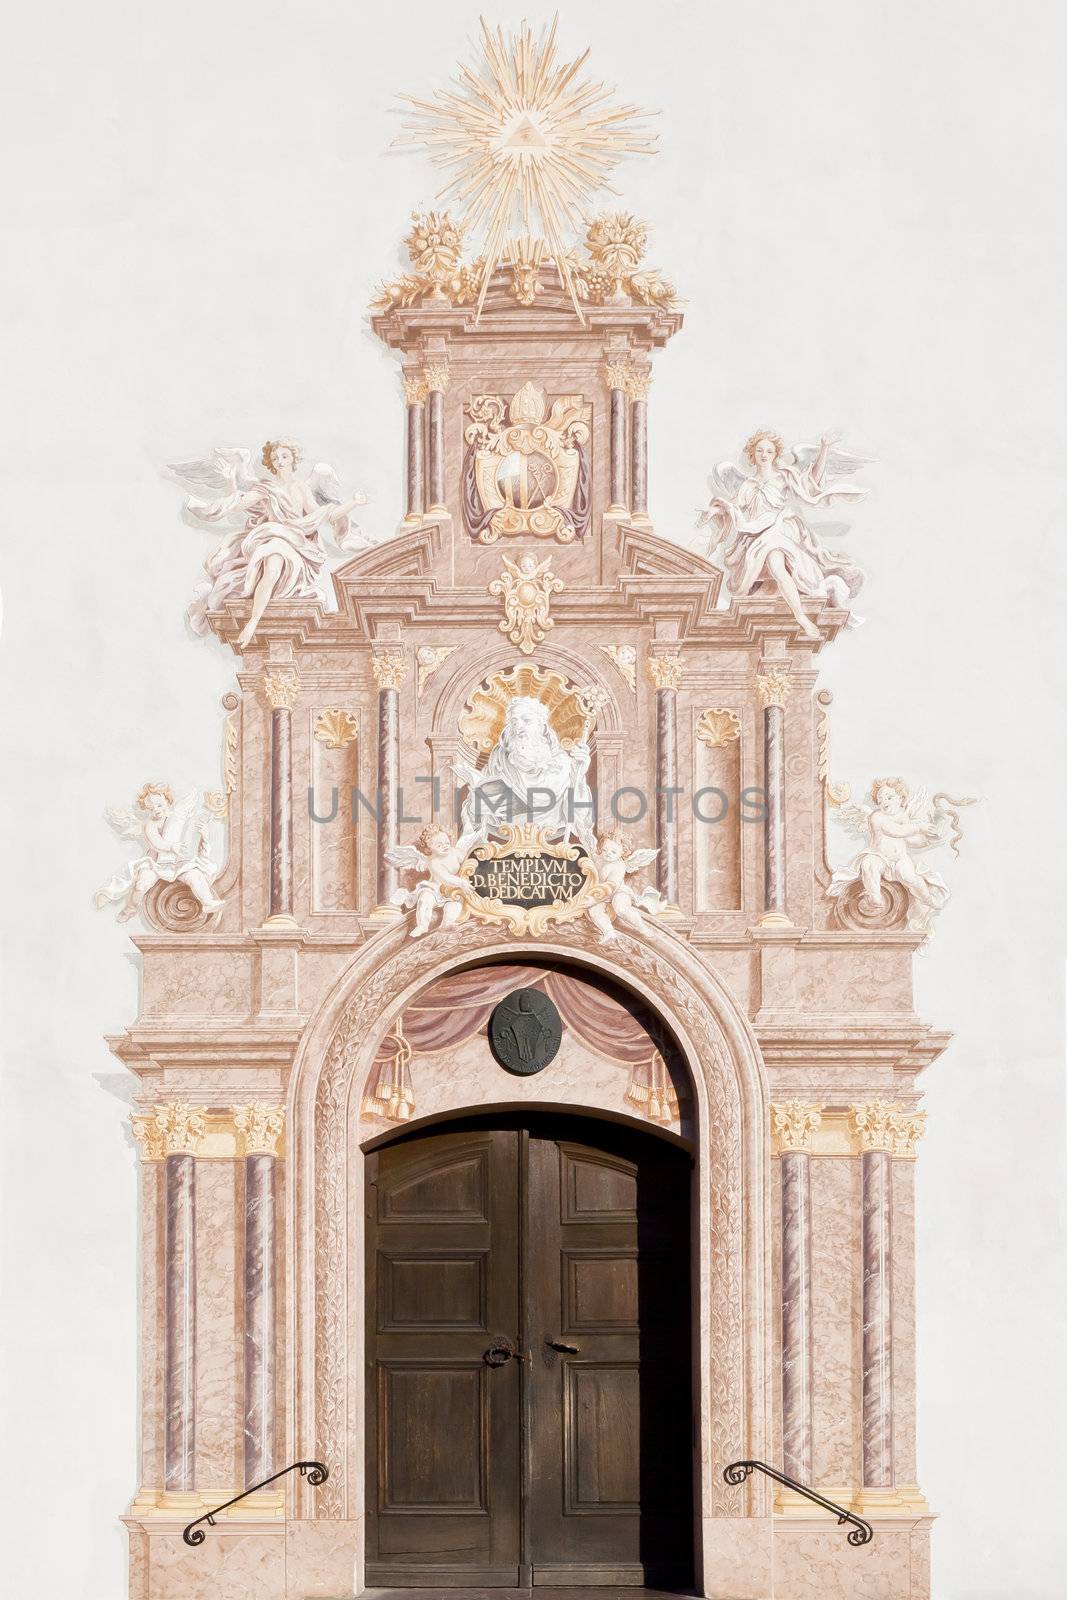 An image of the entry door Benediktbeuern in Bavaria Germany